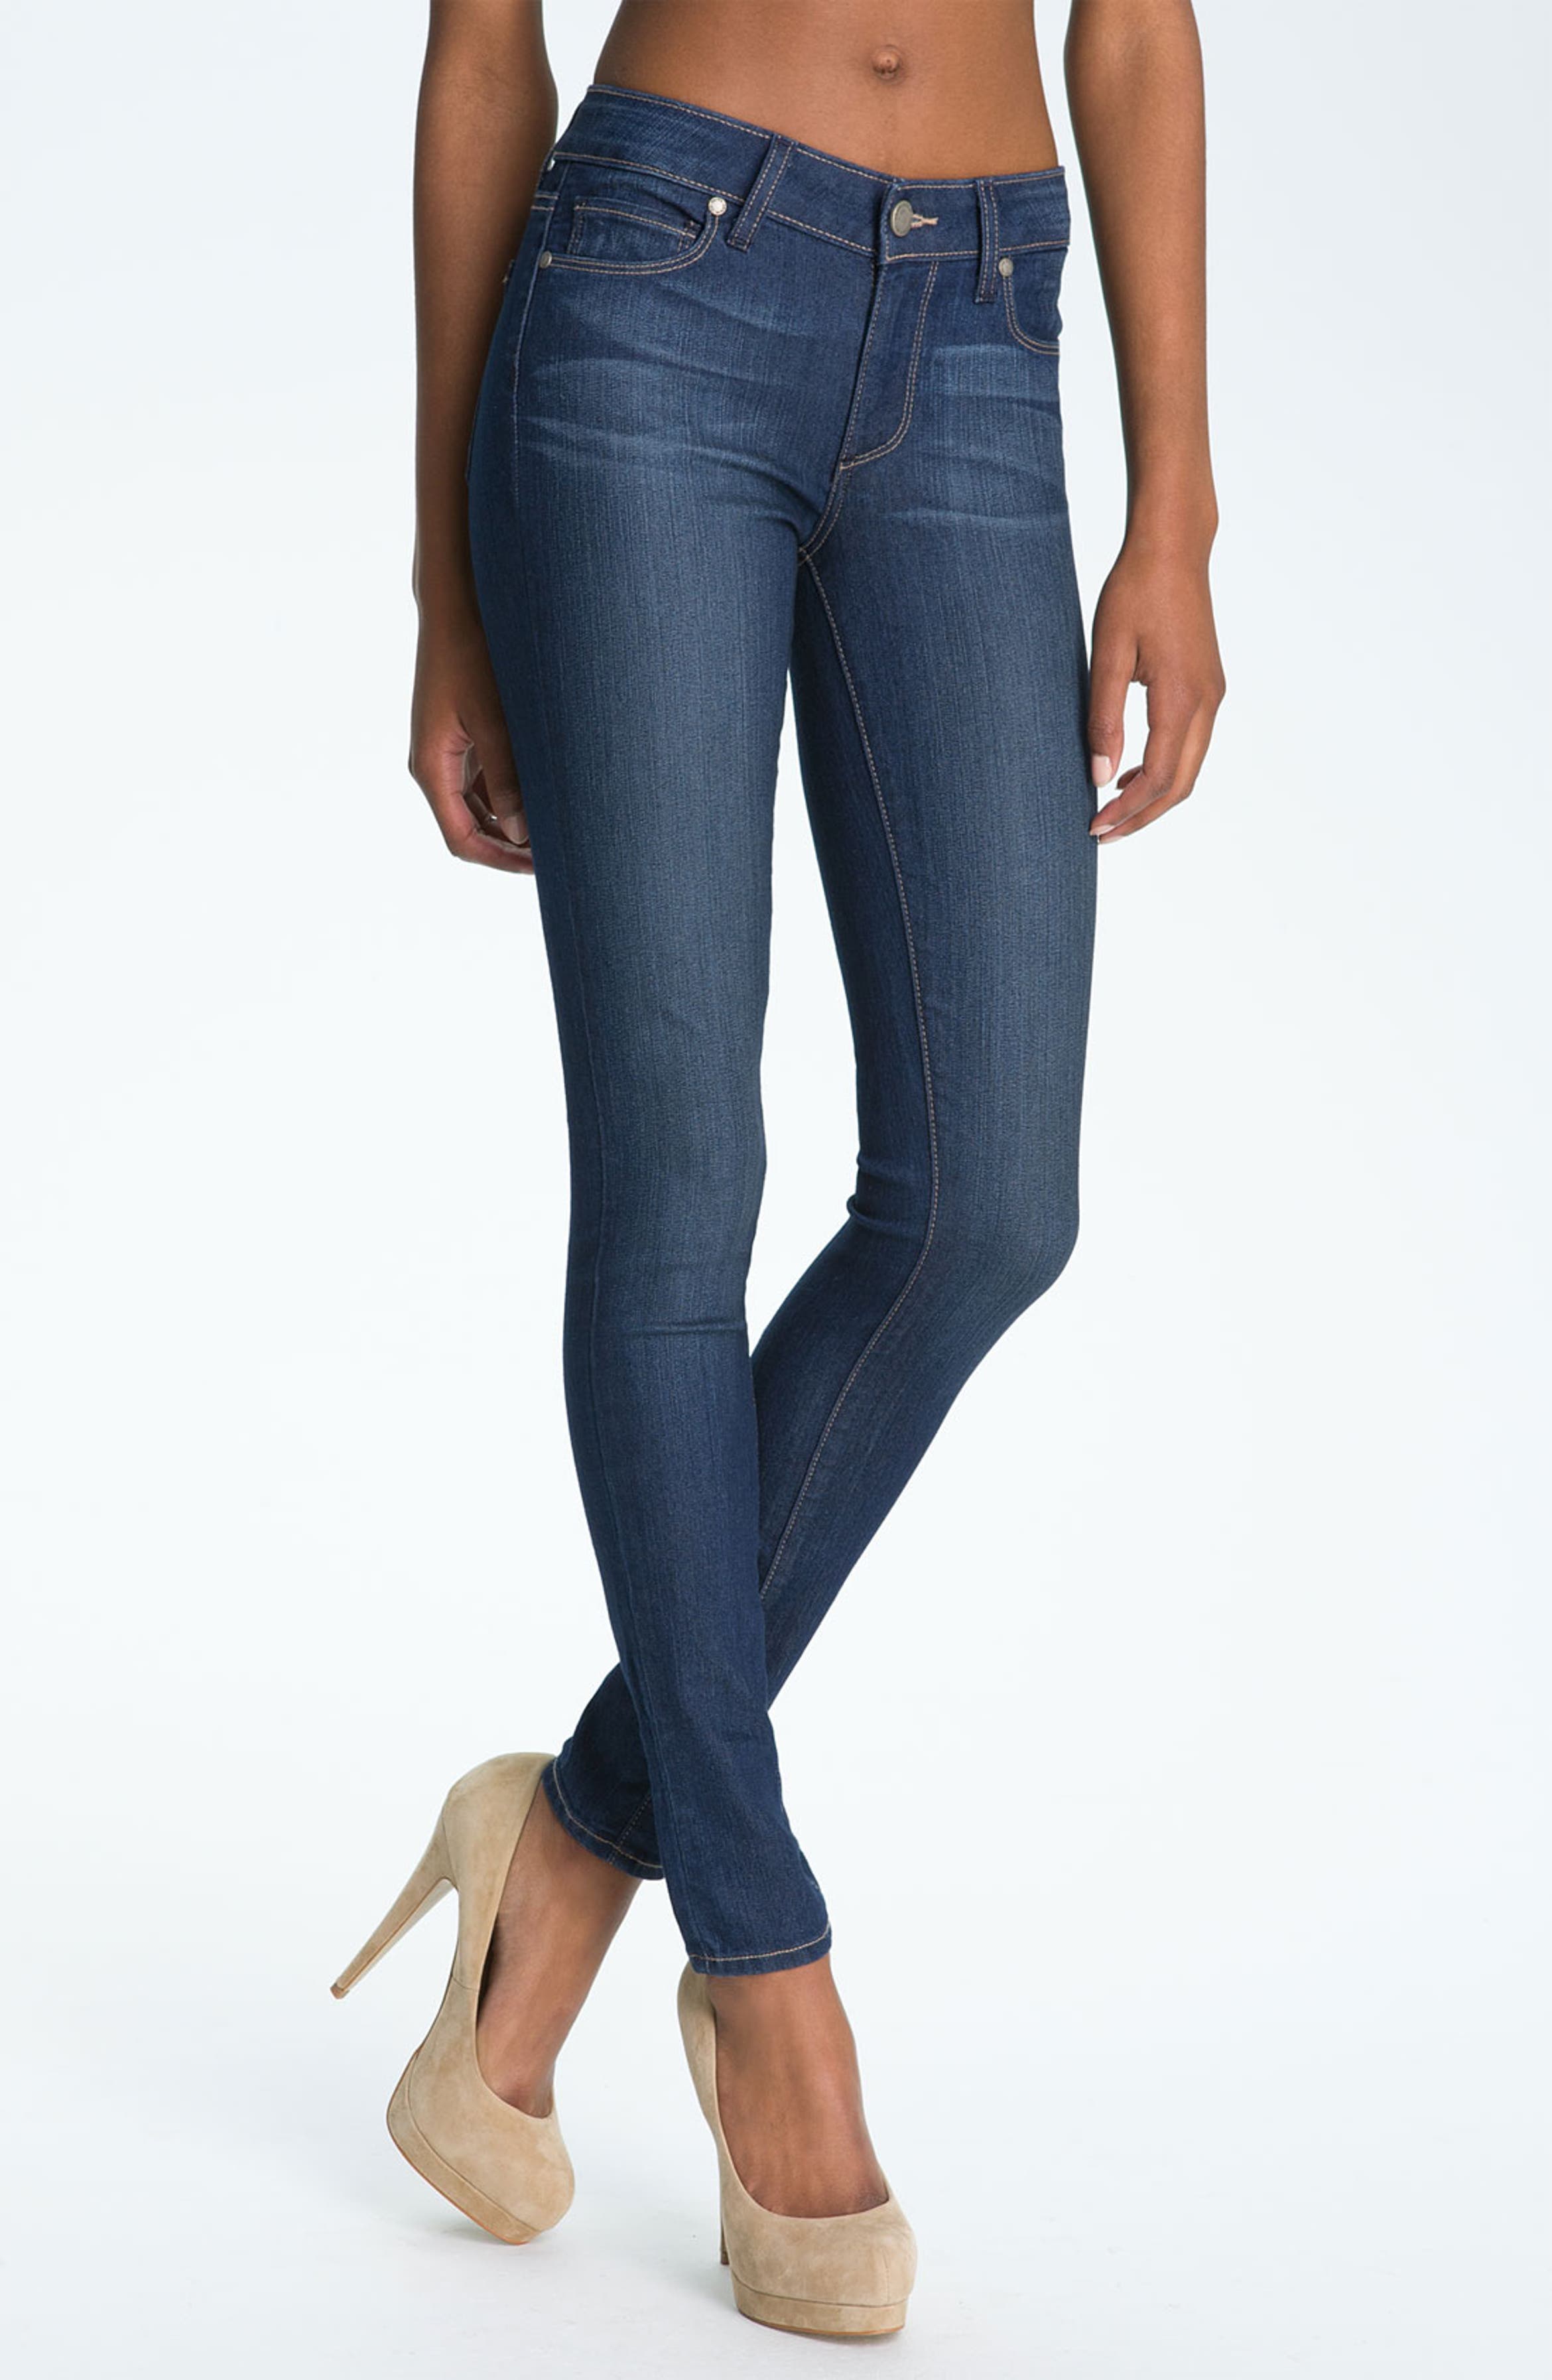 Source Jacquard denim fabric for women jeans wholesale on m.